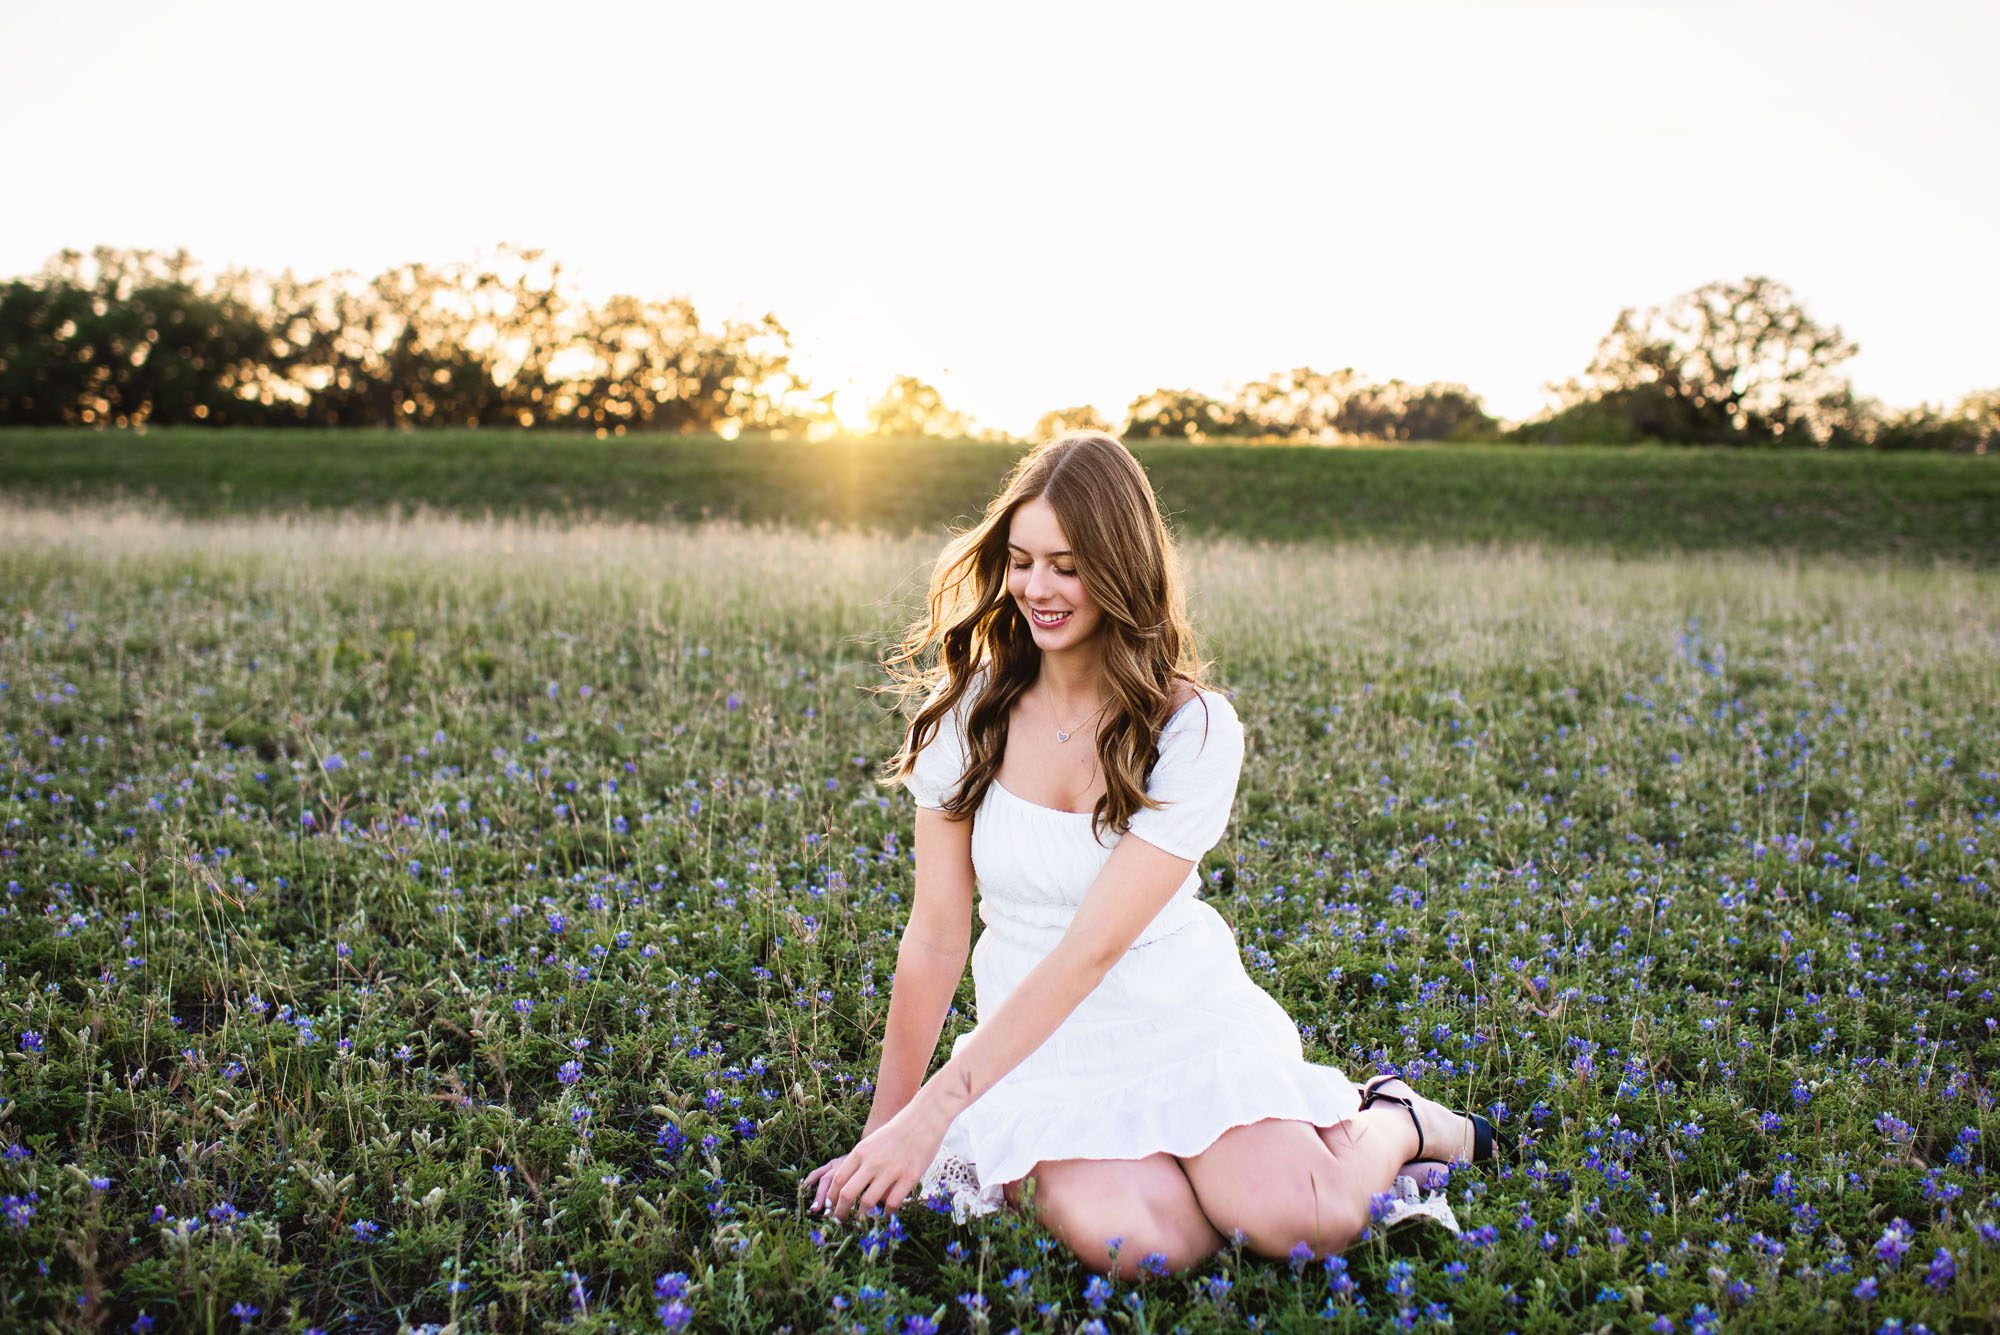 Girl in white dress sitting in bluebonnet field touching flowers, San Antonio senior photography